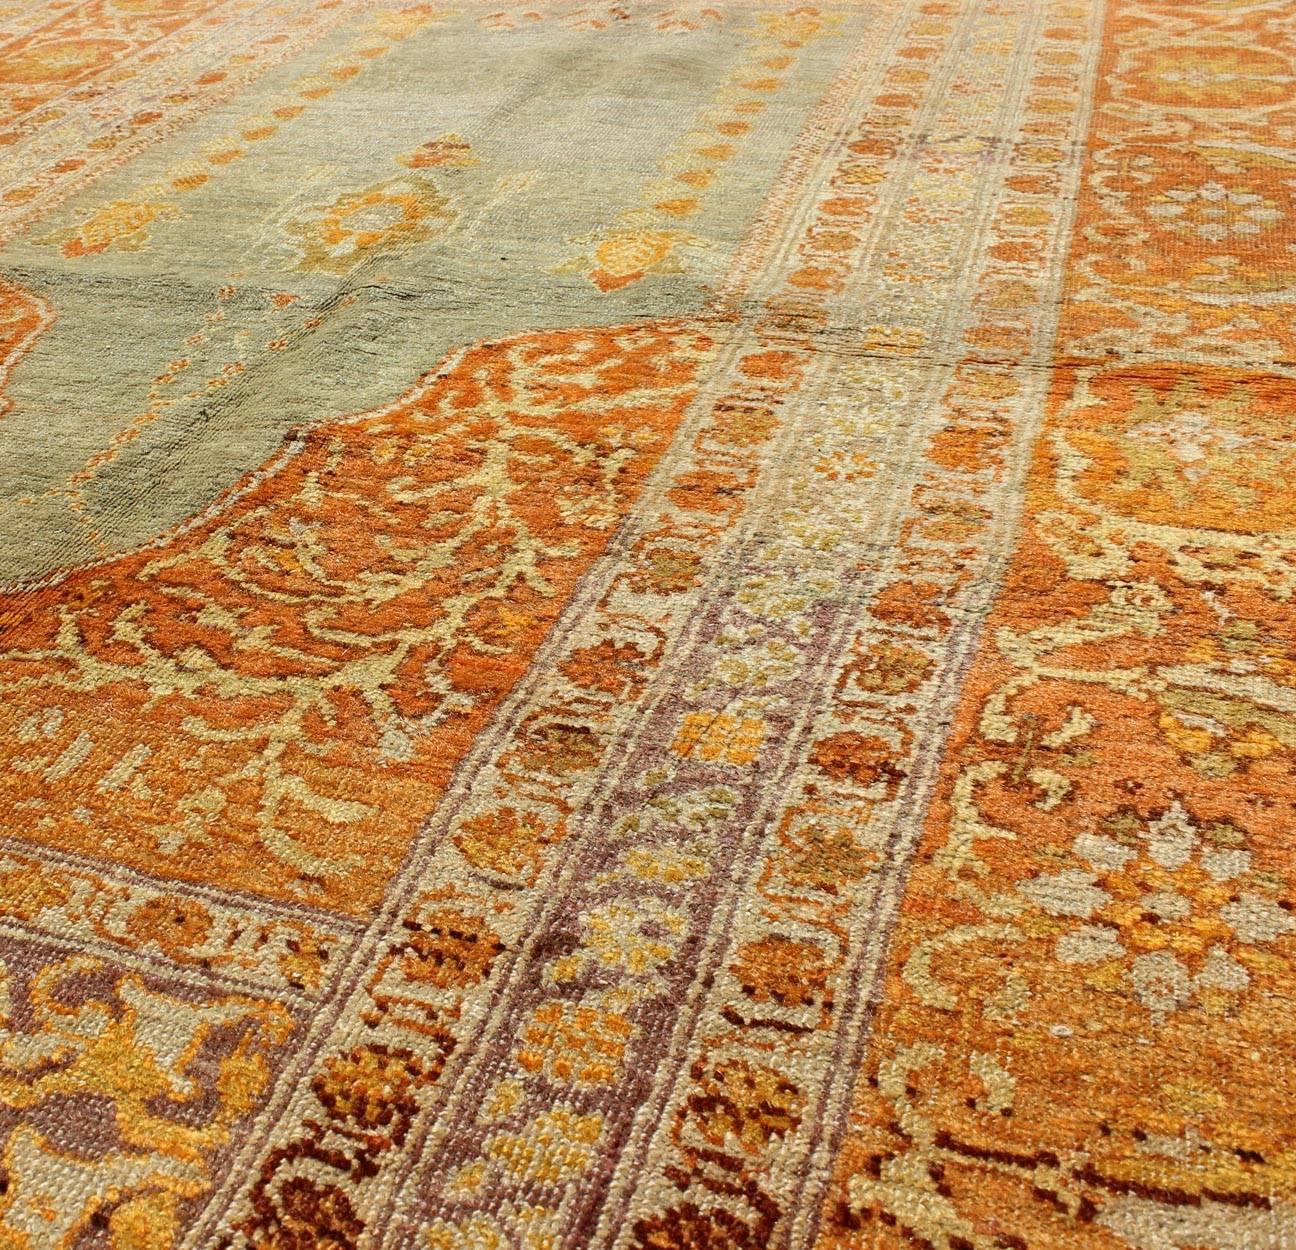 Antique Turkish Sivas Carpet with Prayer Design in Light Silver and Copper In Excellent Condition For Sale In Atlanta, GA